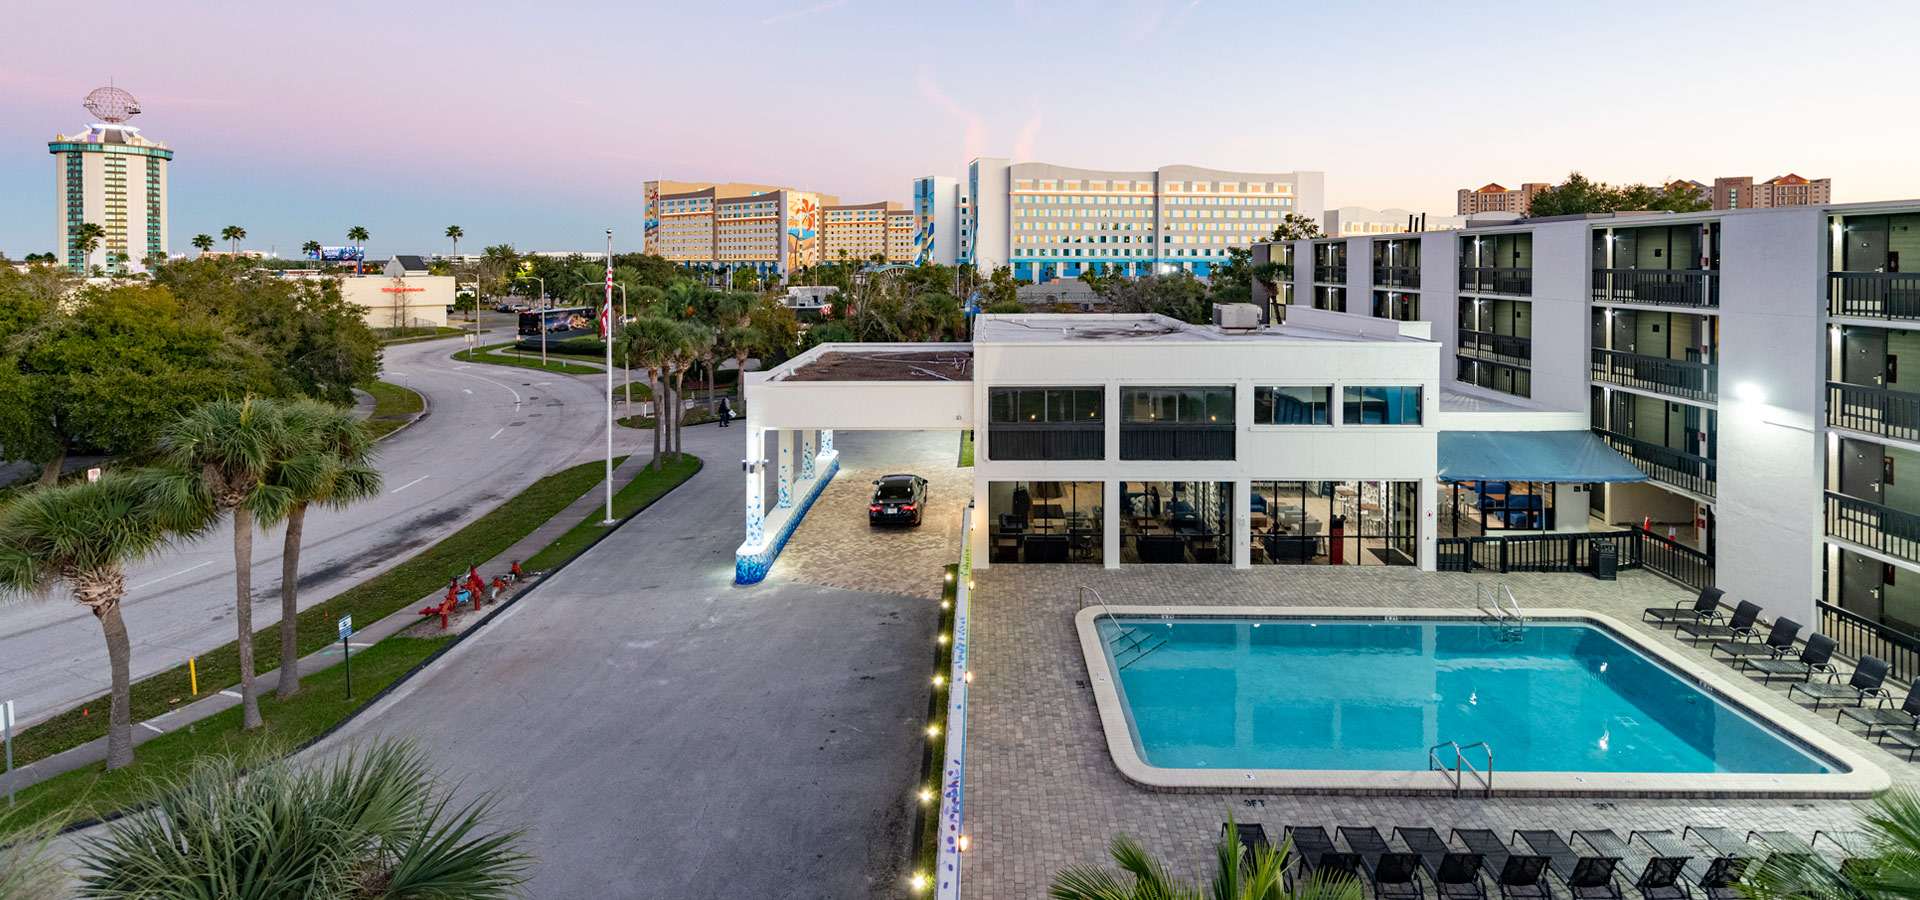 Pool Hotel Monreale Express I-drive Orlando